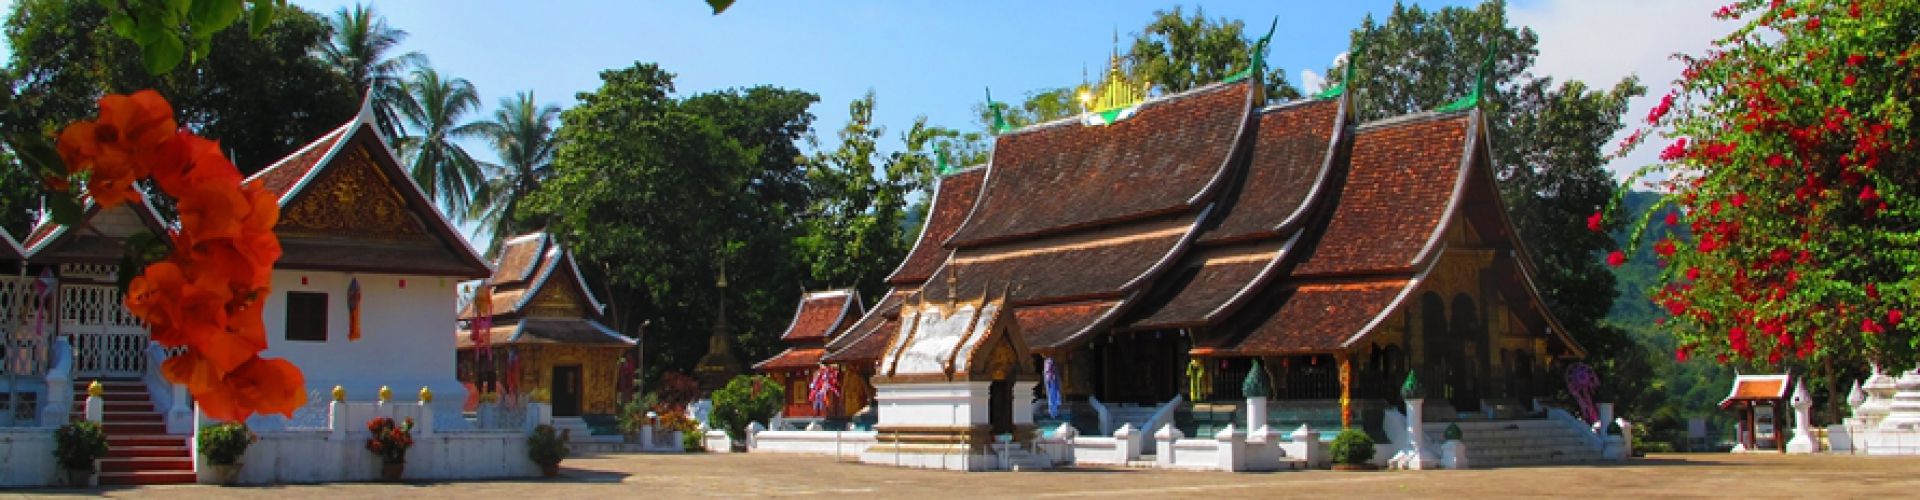 Destinations in Luang Prabang